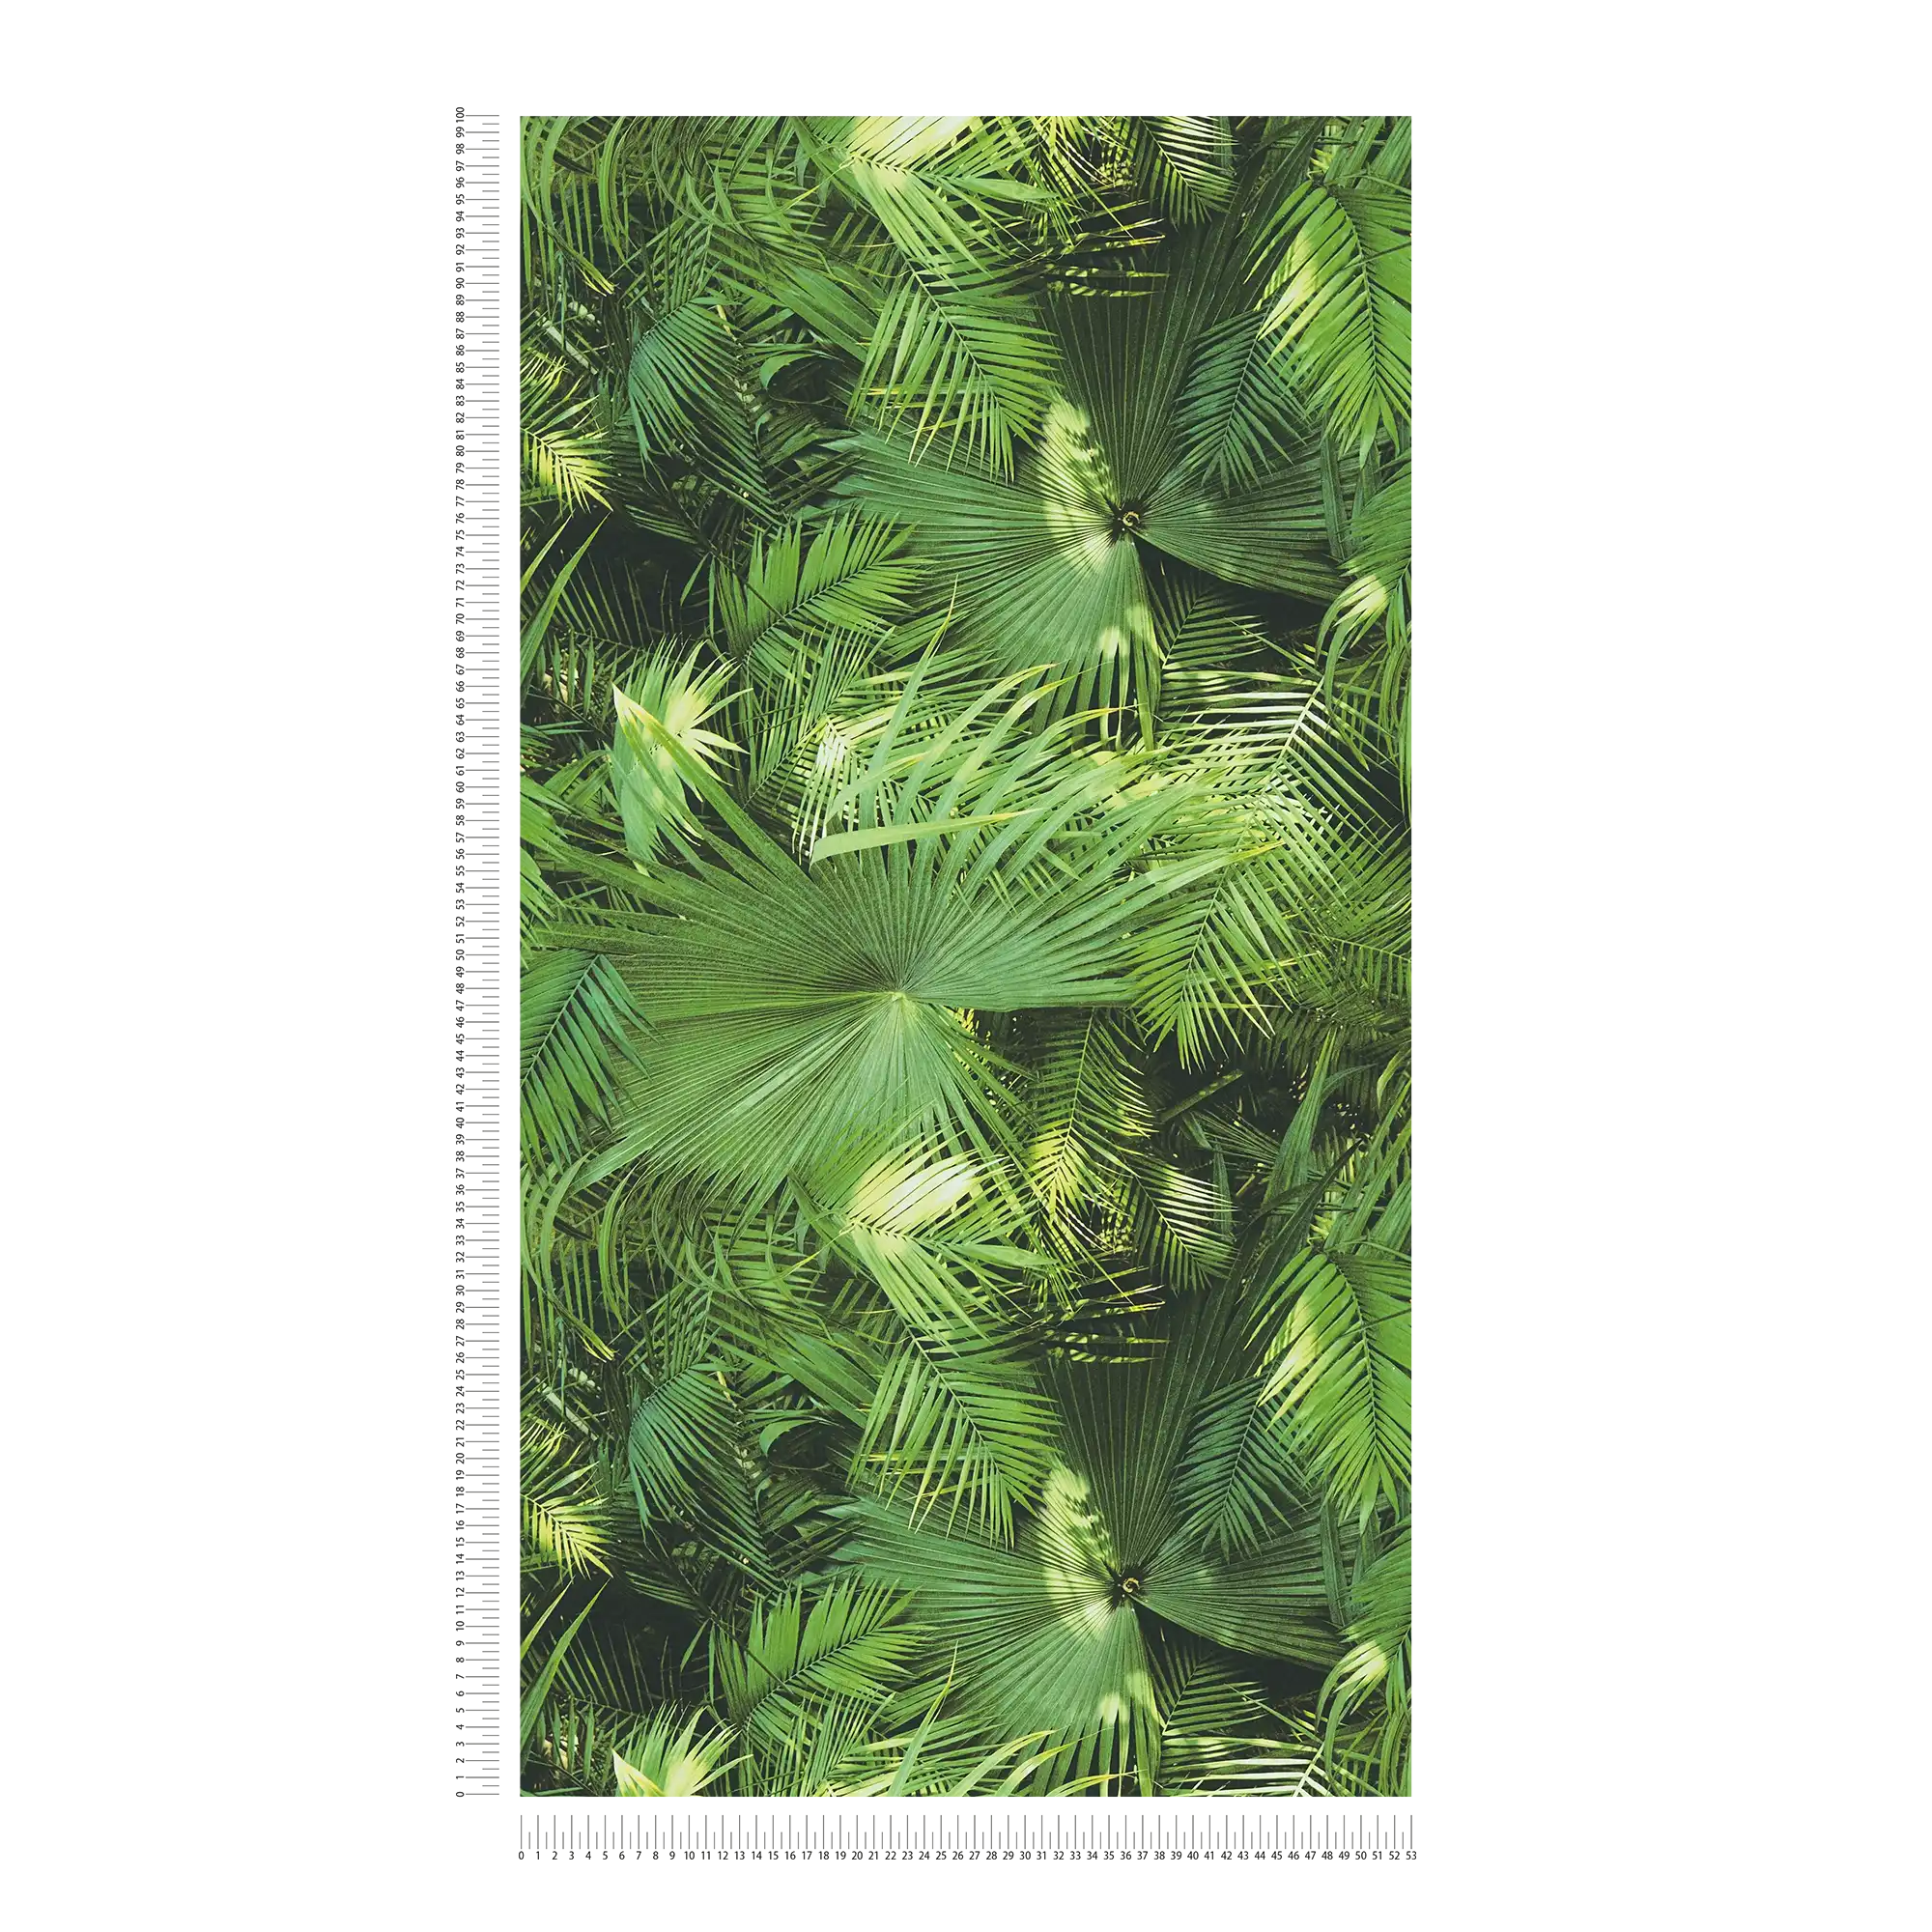             Papel pintado autoadhesivo | hojas de la selva verde
        